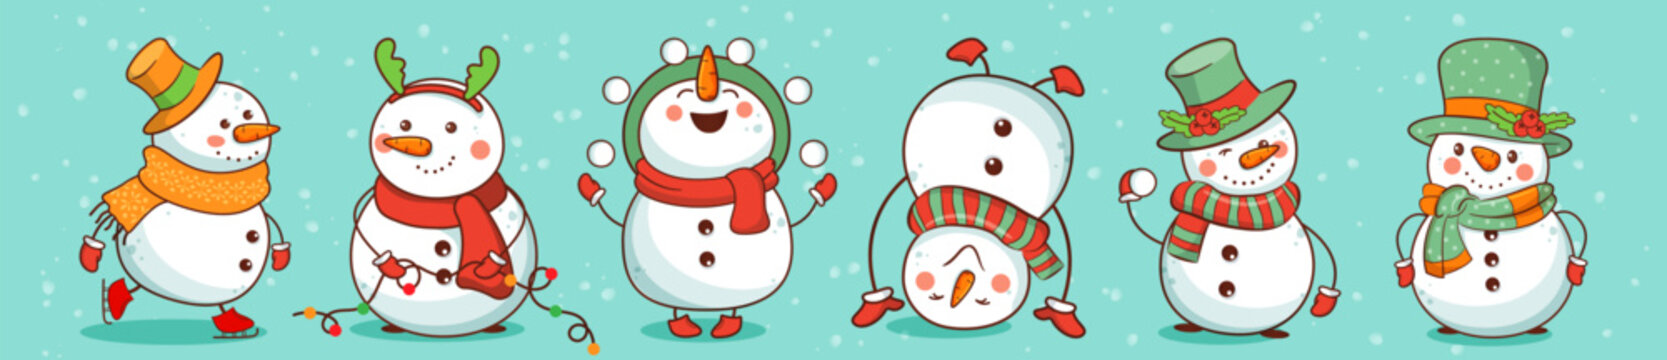 Cute winter Christmas snowmen set. Flat cartoon vector illustration.